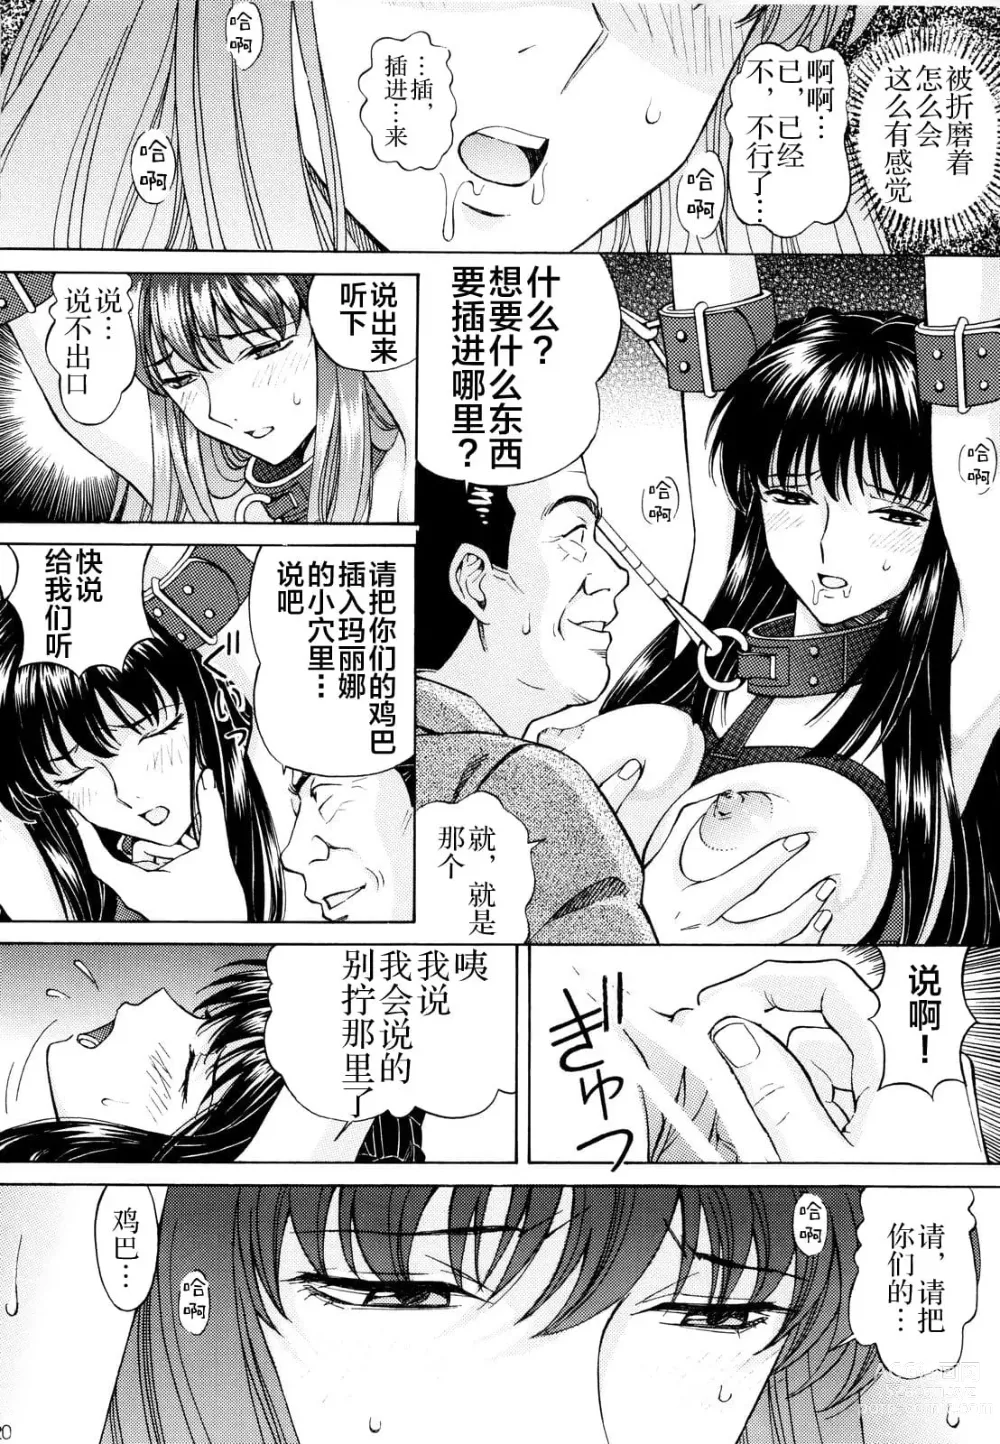 Page 19 of doujinshi Chijoku! Marina